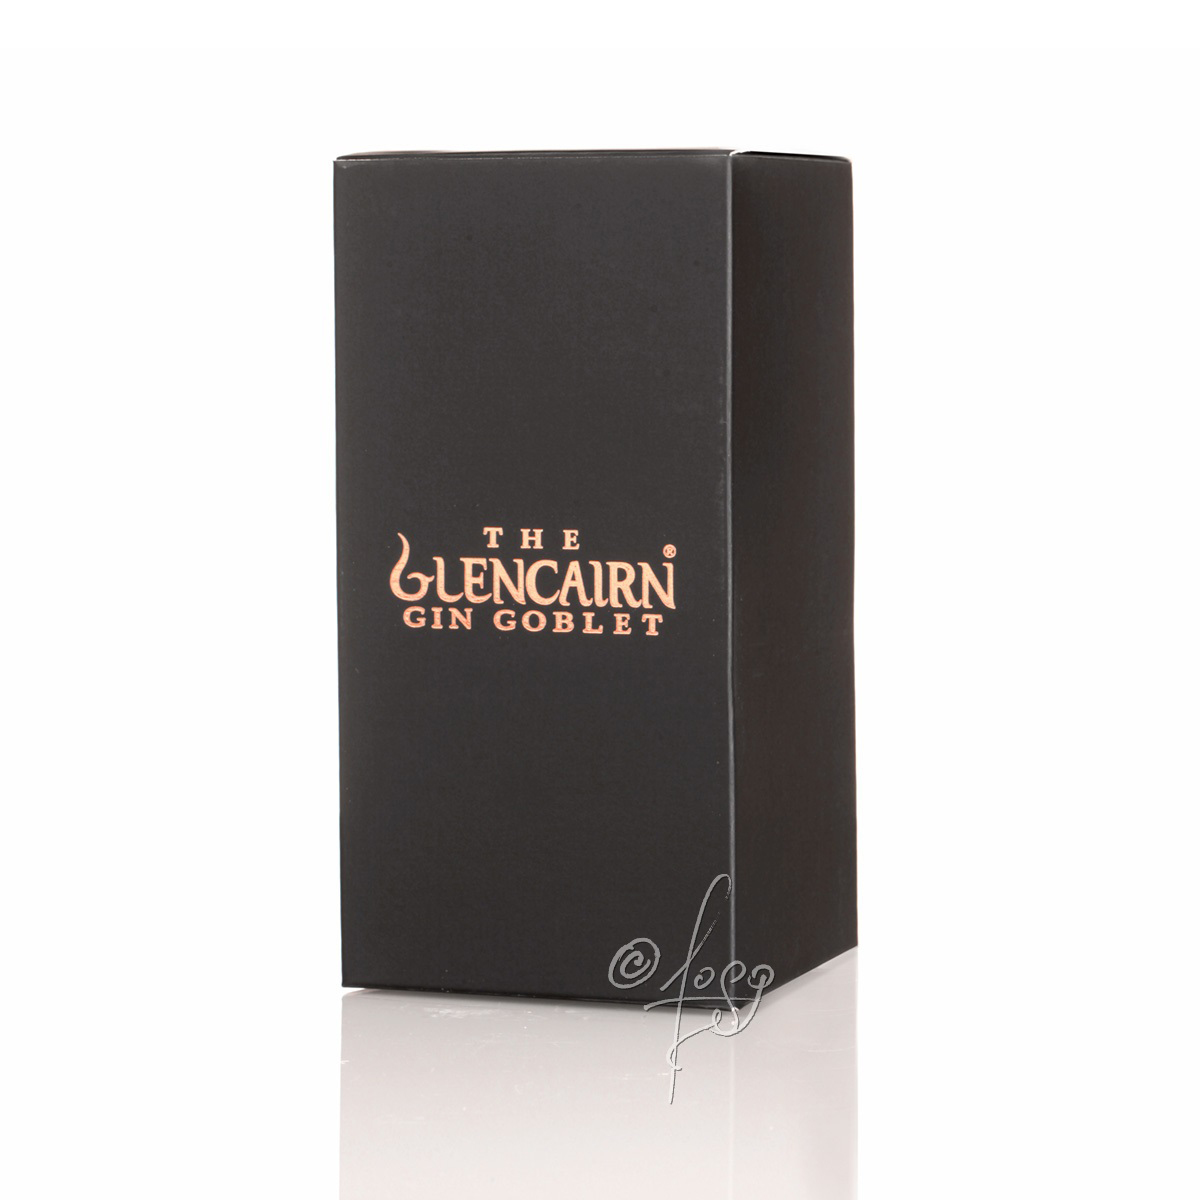 Glencairn Gin Goblet - Gin & Tonic Copa made in Scotland